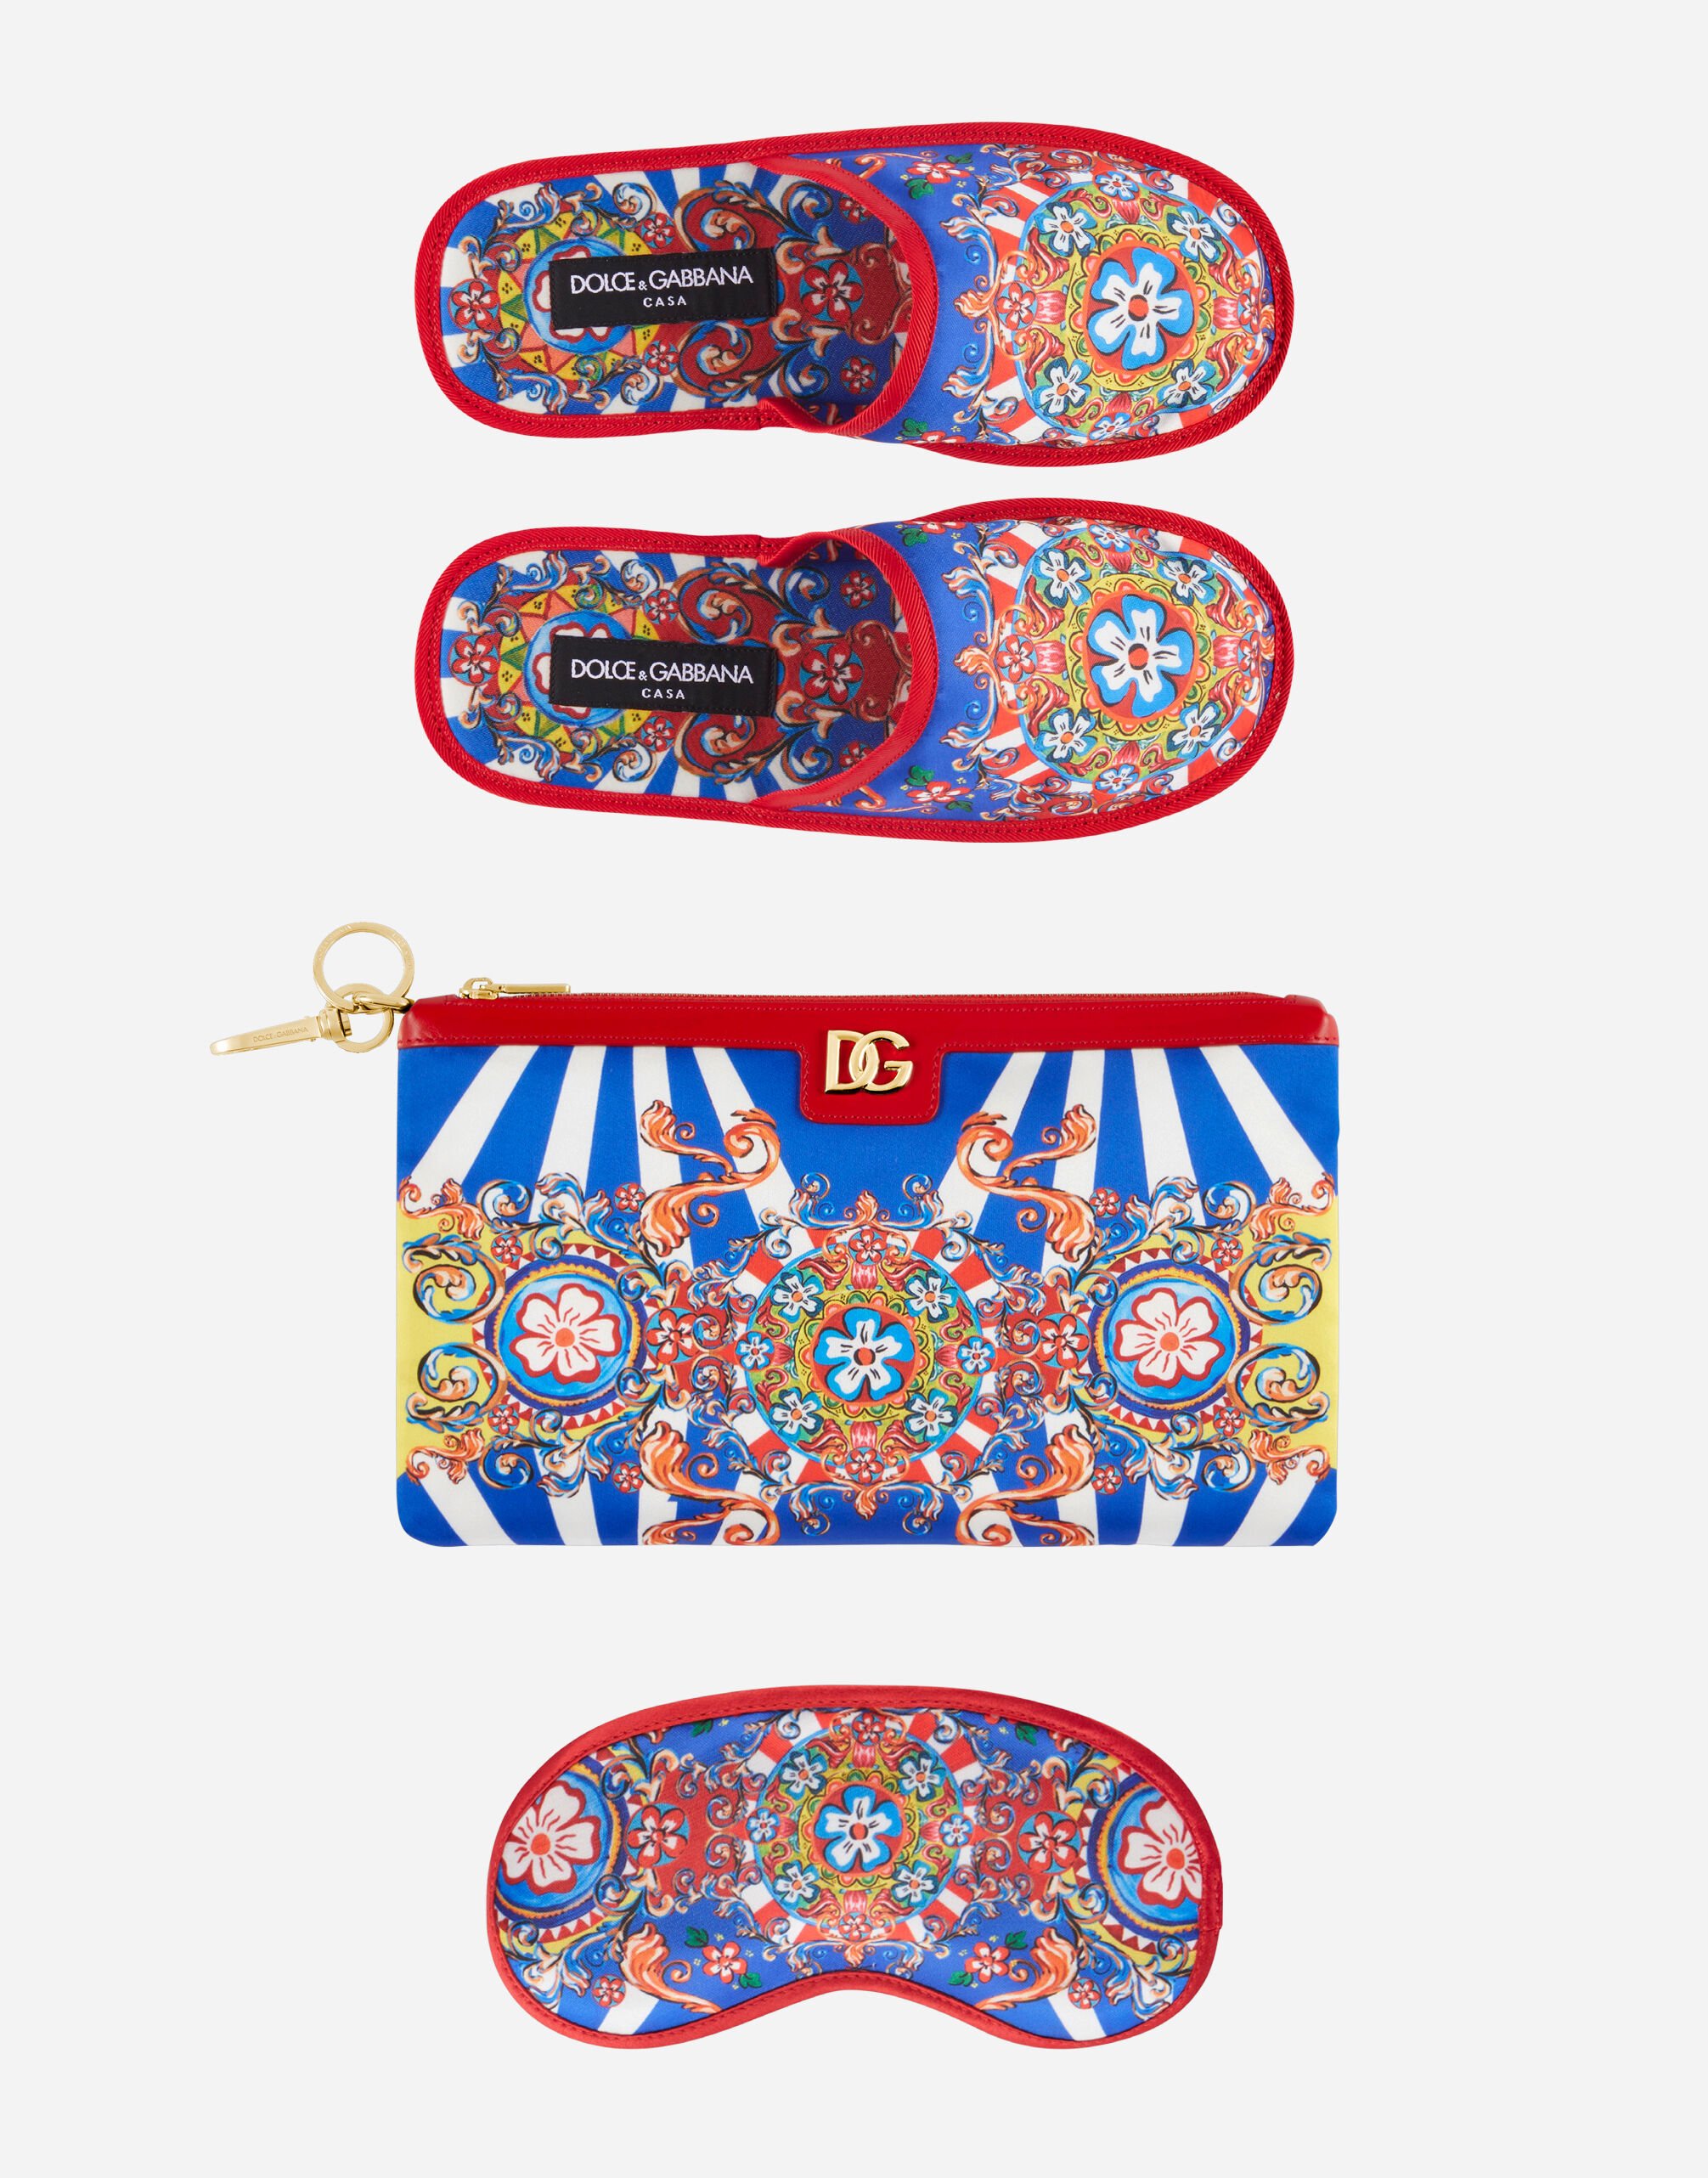 Dolce & Gabbana Comfort Kit Multicolore VL1132VLTW2